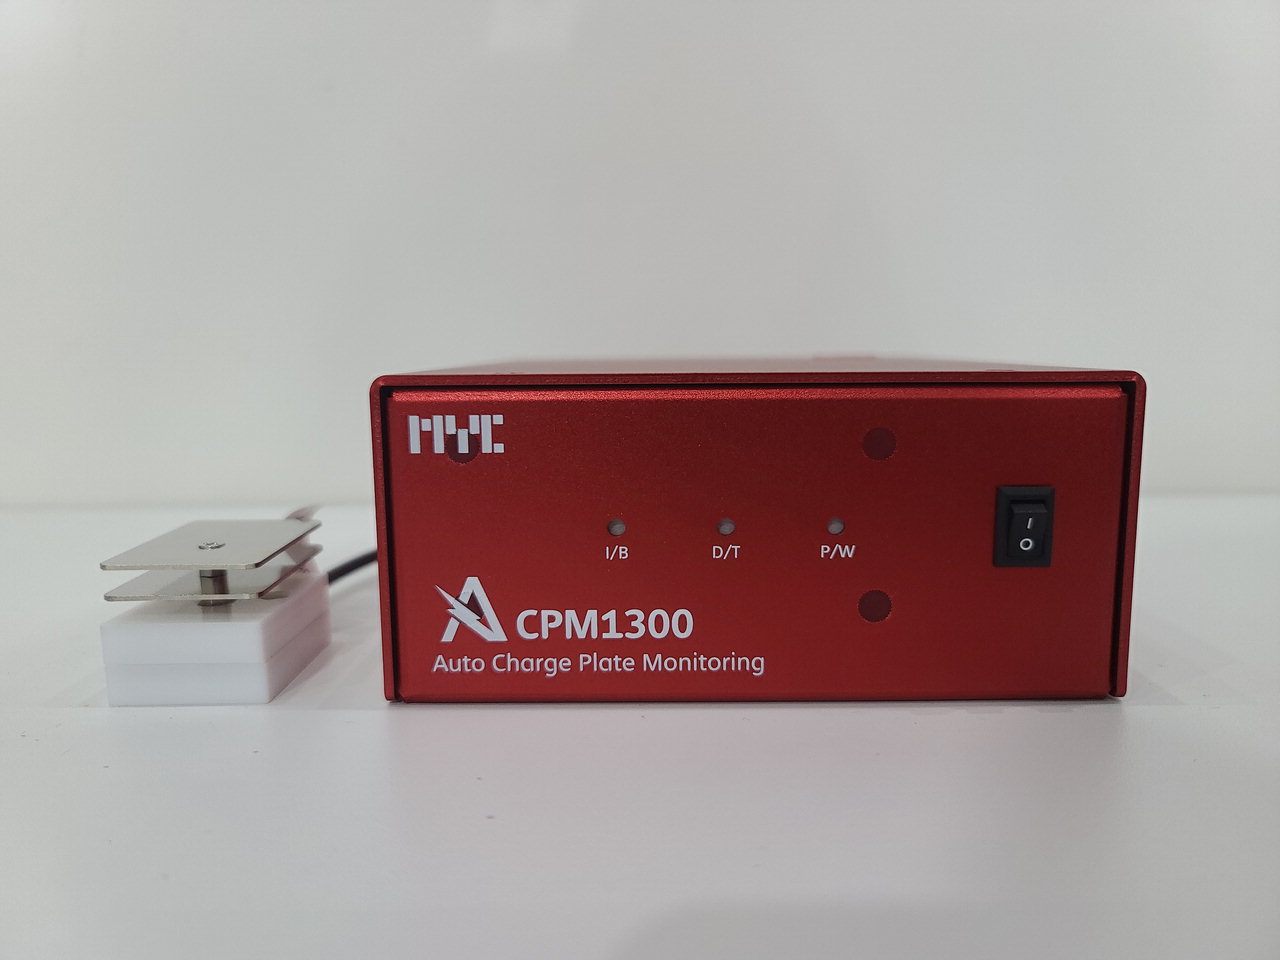 MYC 주력 제품인 이오나이저 오토 모니터링 시스템 장치 'A-CPM 1300' /MYC